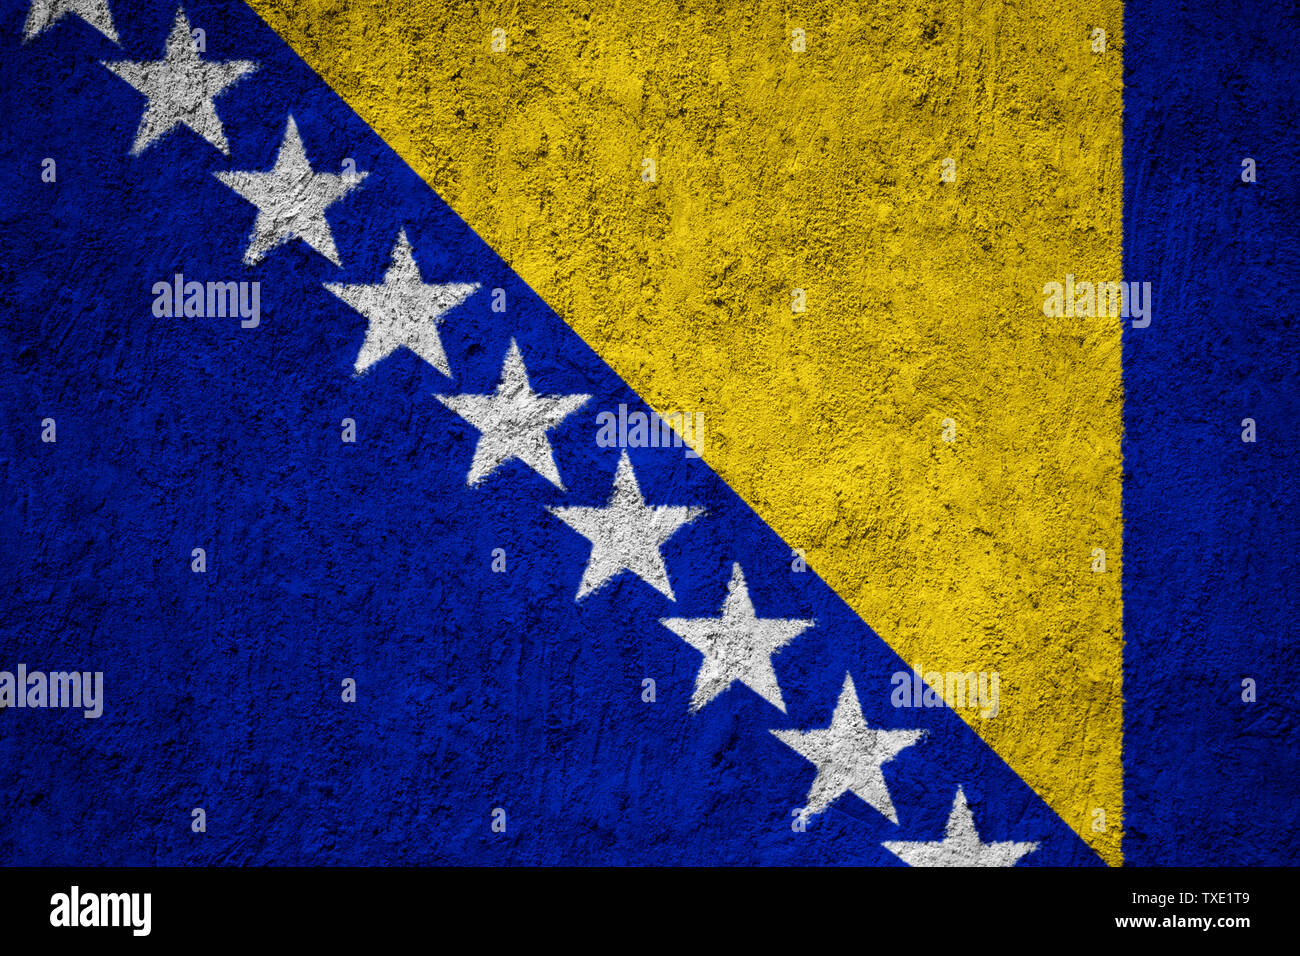 Bosnia and Herzegovina flag painted on the cracked grunge concrete wall Stock Photo